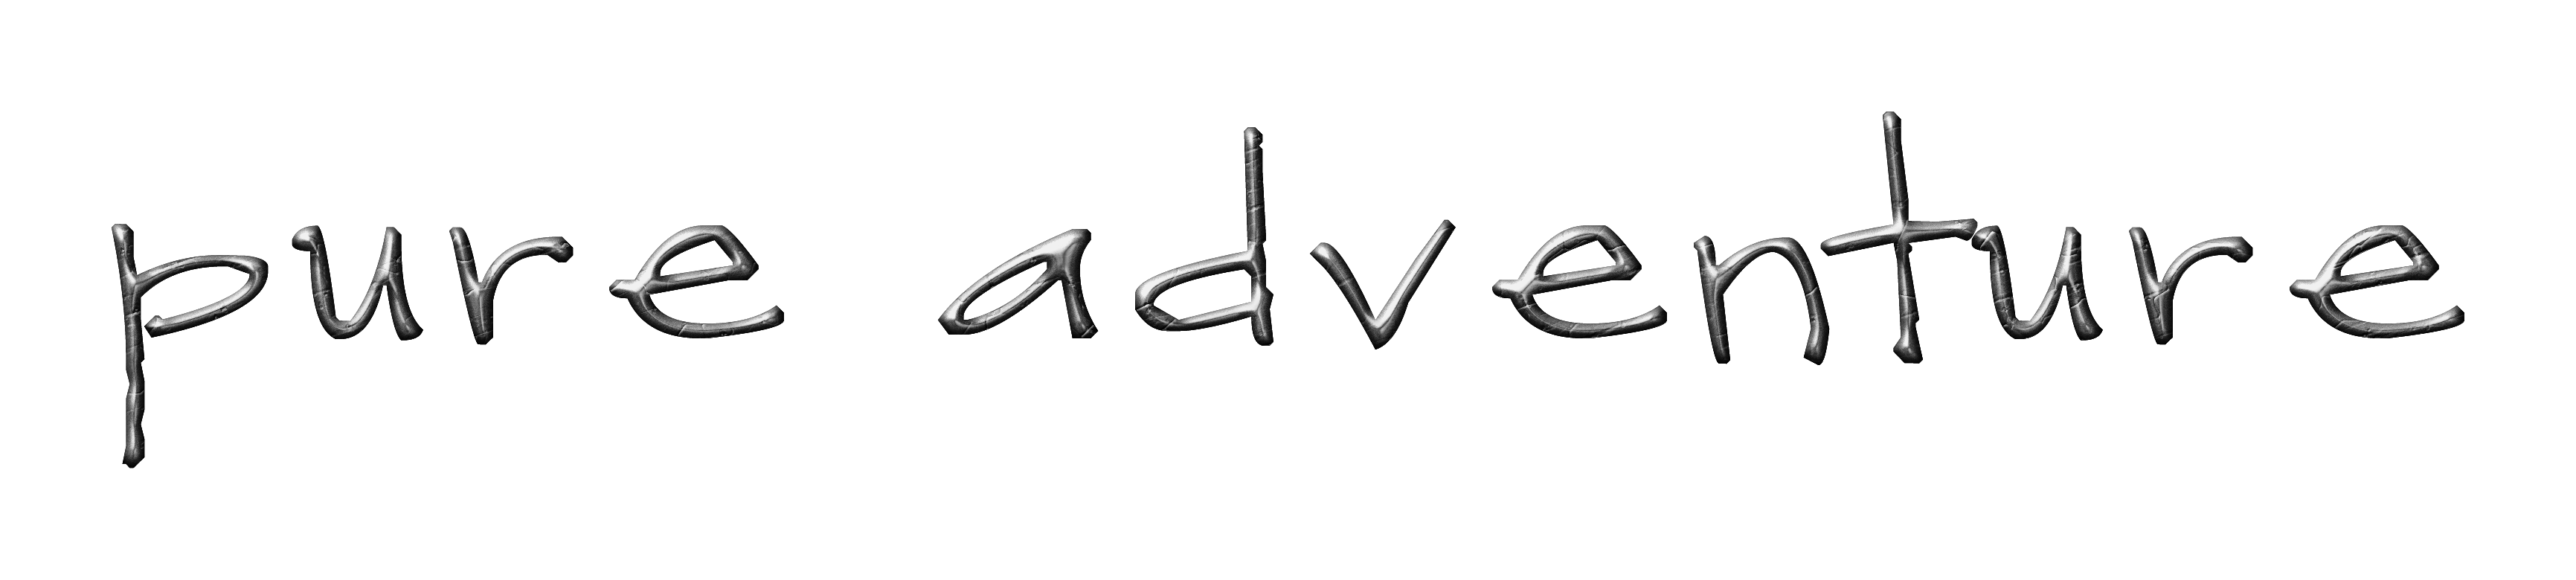 Adventure Word PNG - 166701